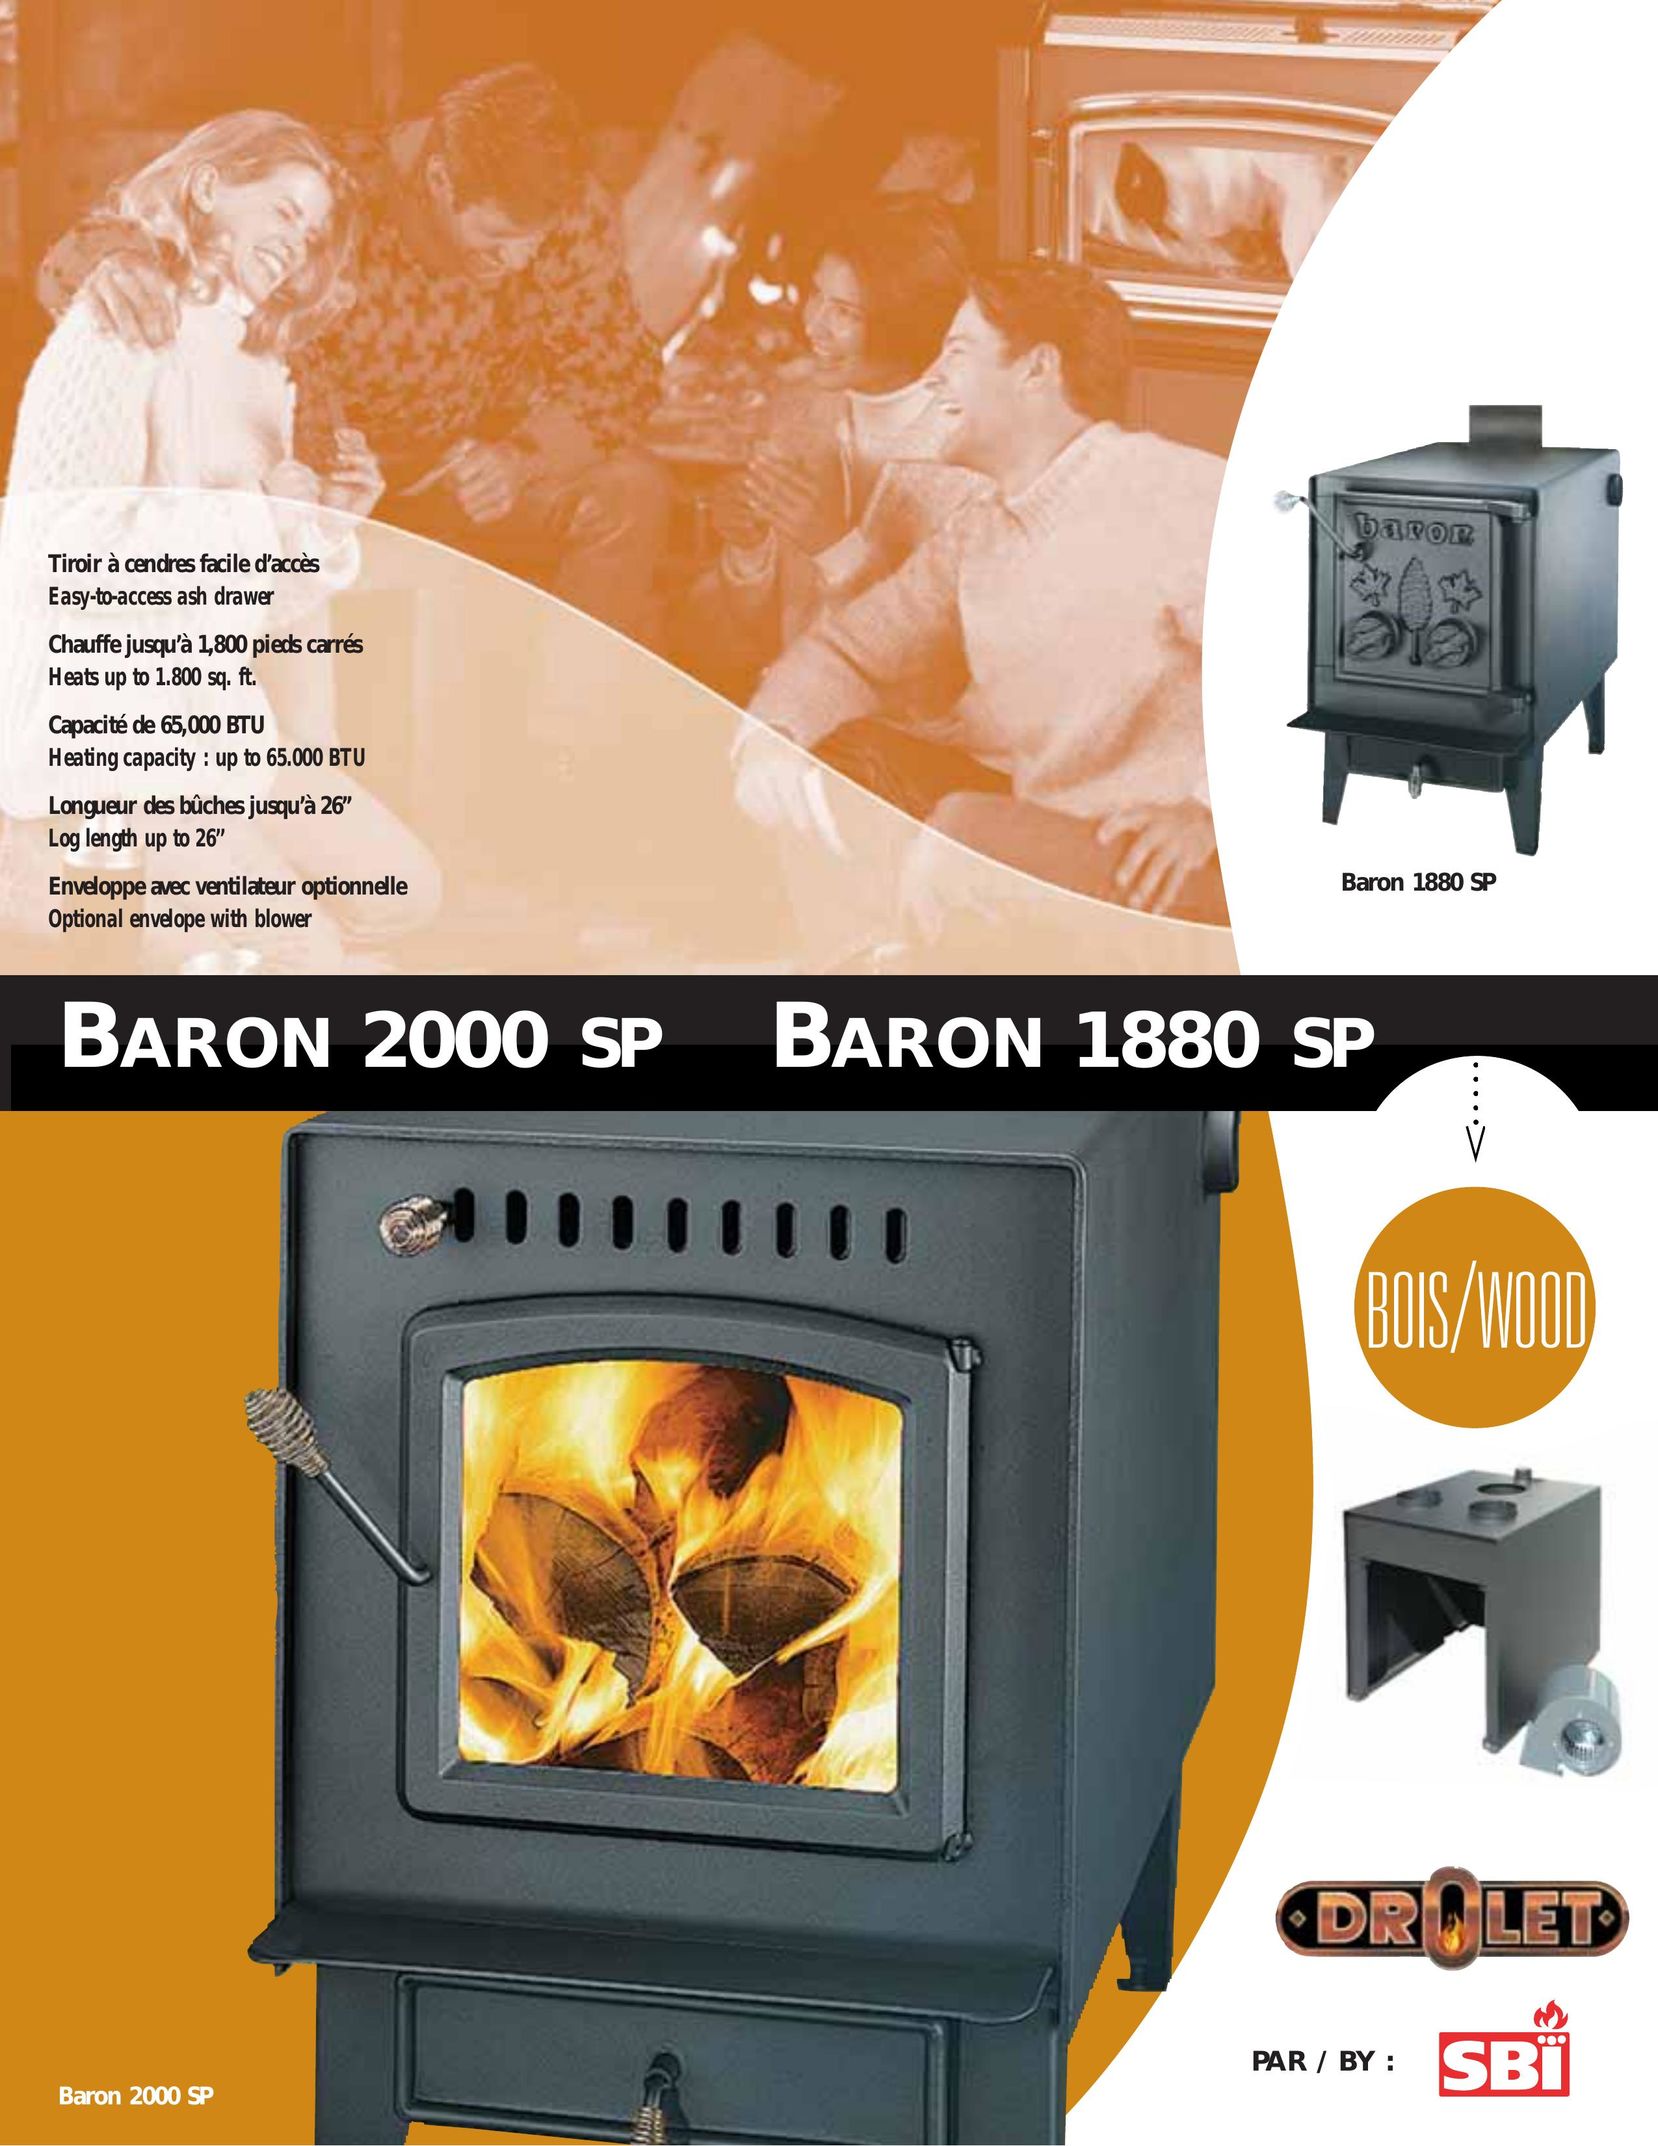 Drolet Baron 2000 SP Stove User Manual